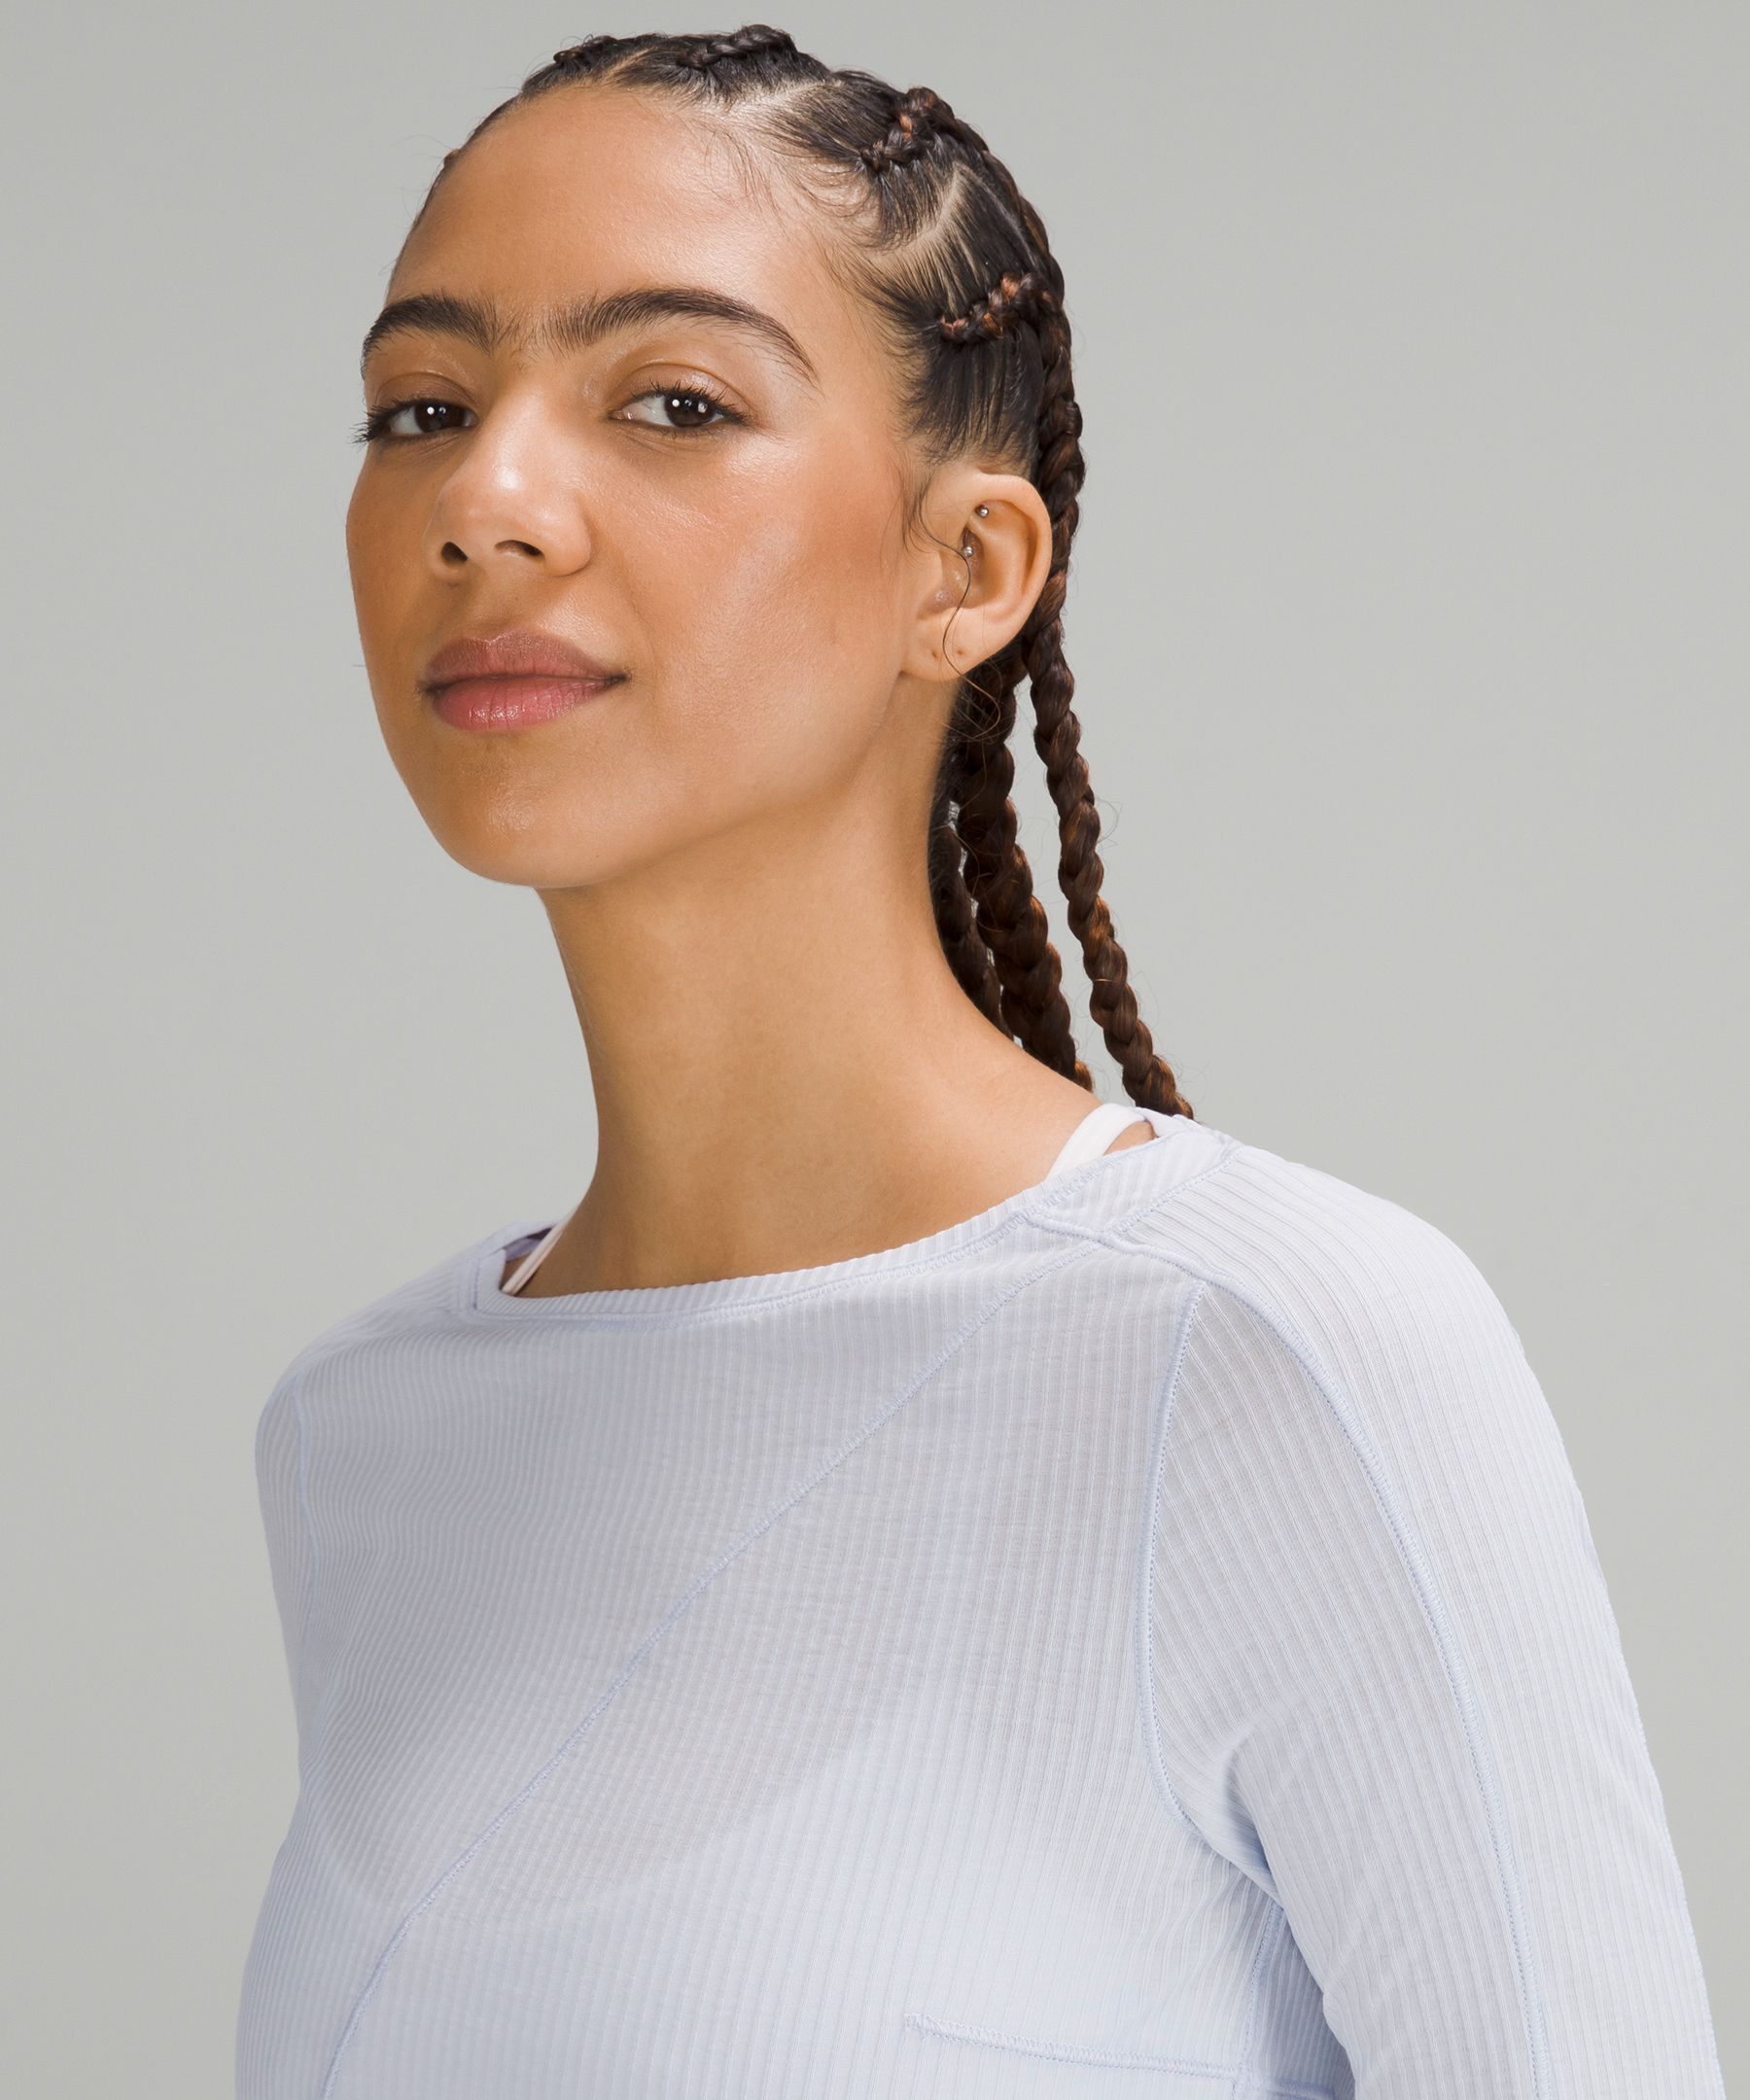 Lululemon athletica Asymmetrical Ribbed Cotton Long-Sleeve Shirt